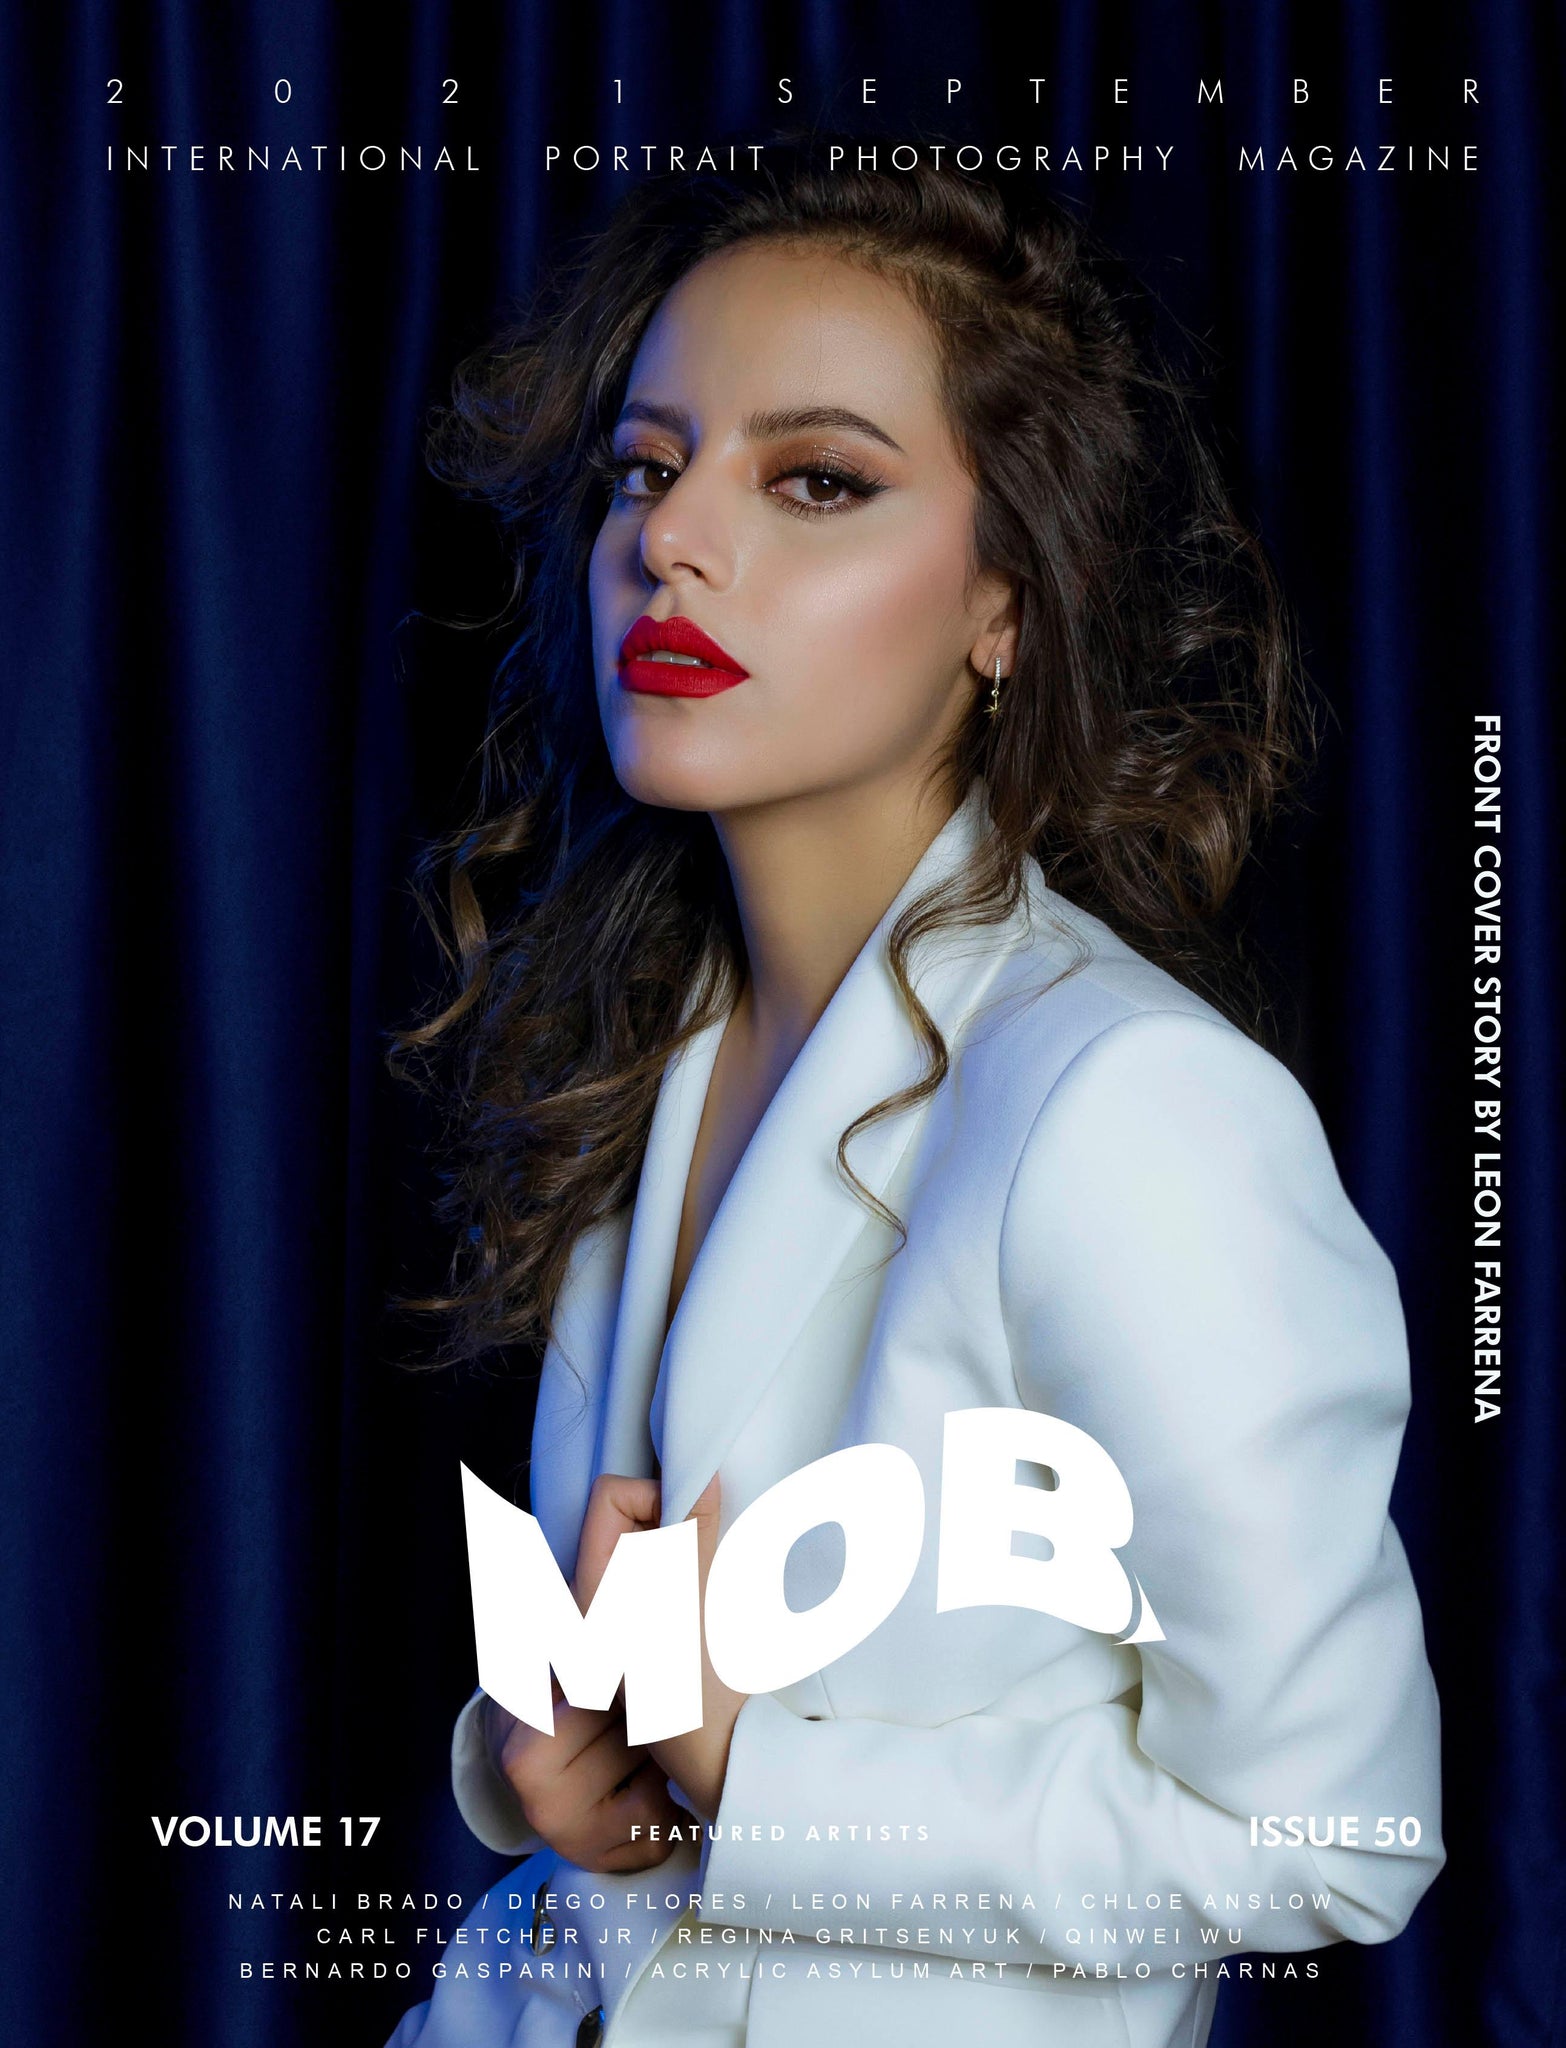 MOB JOURNAL | VOLUME SEVENTEEN | ISSUE #50 - Mob Journal